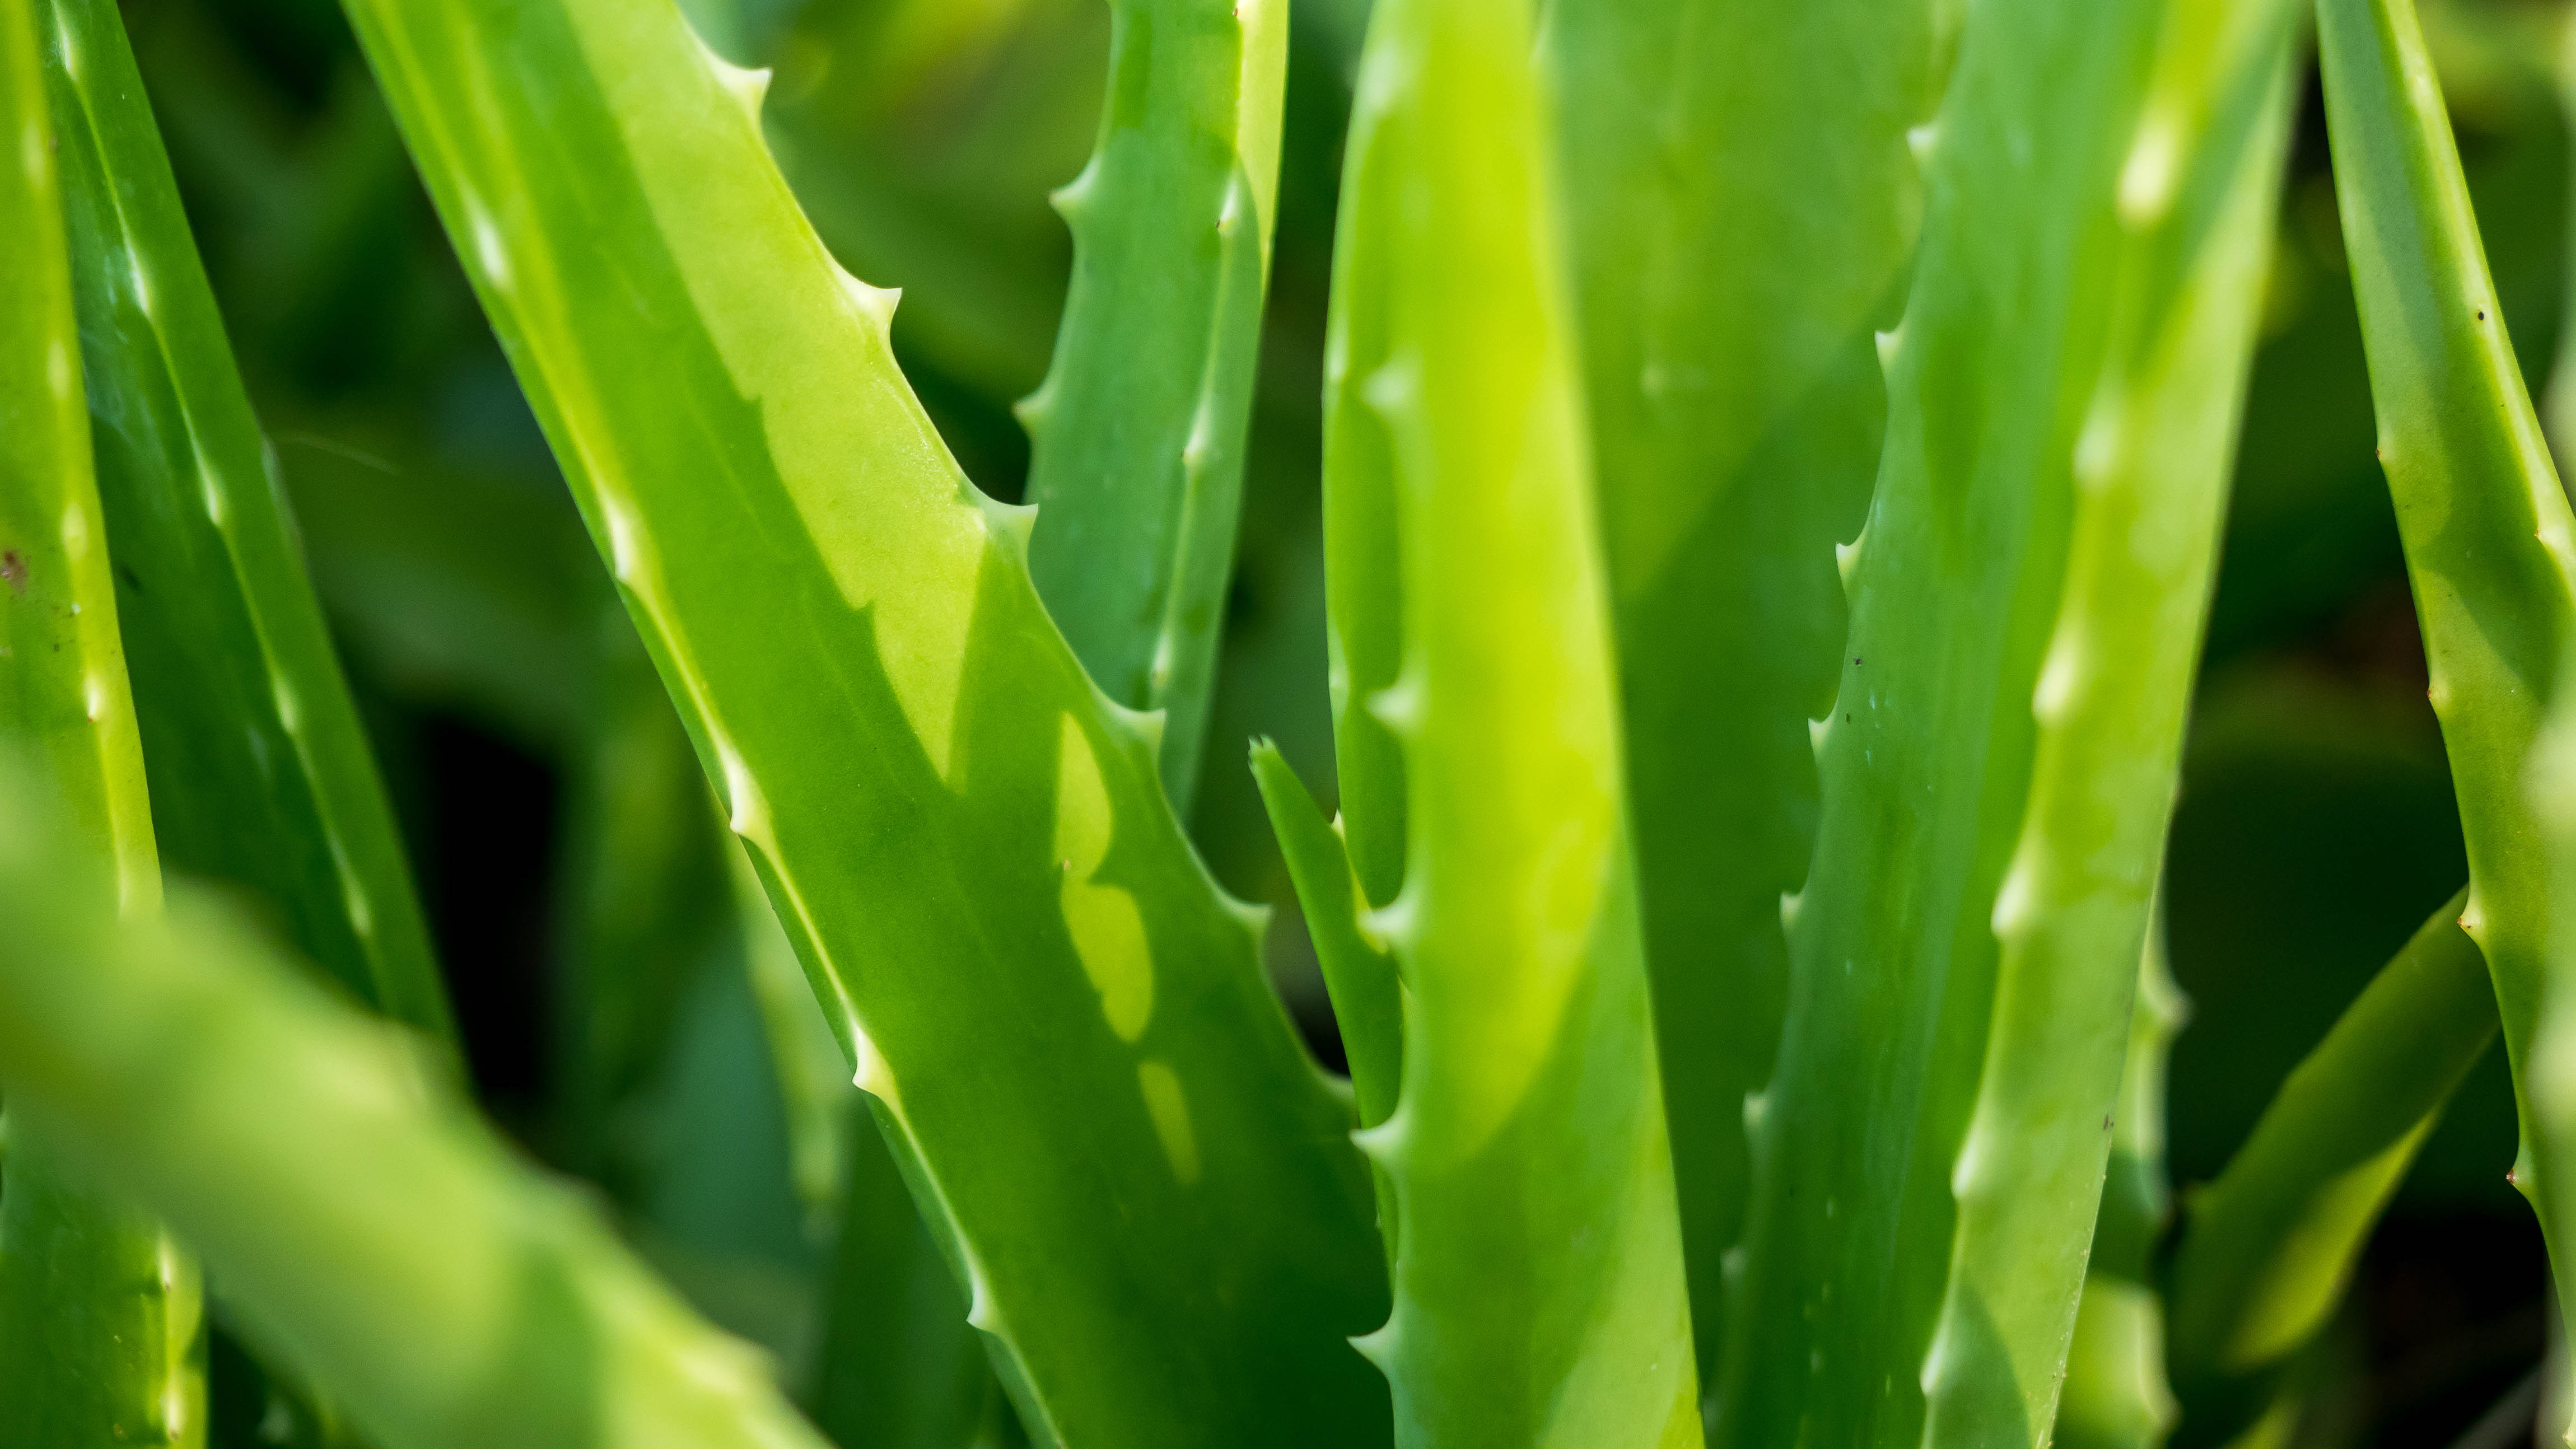 A close up of Aloe Vera leaves